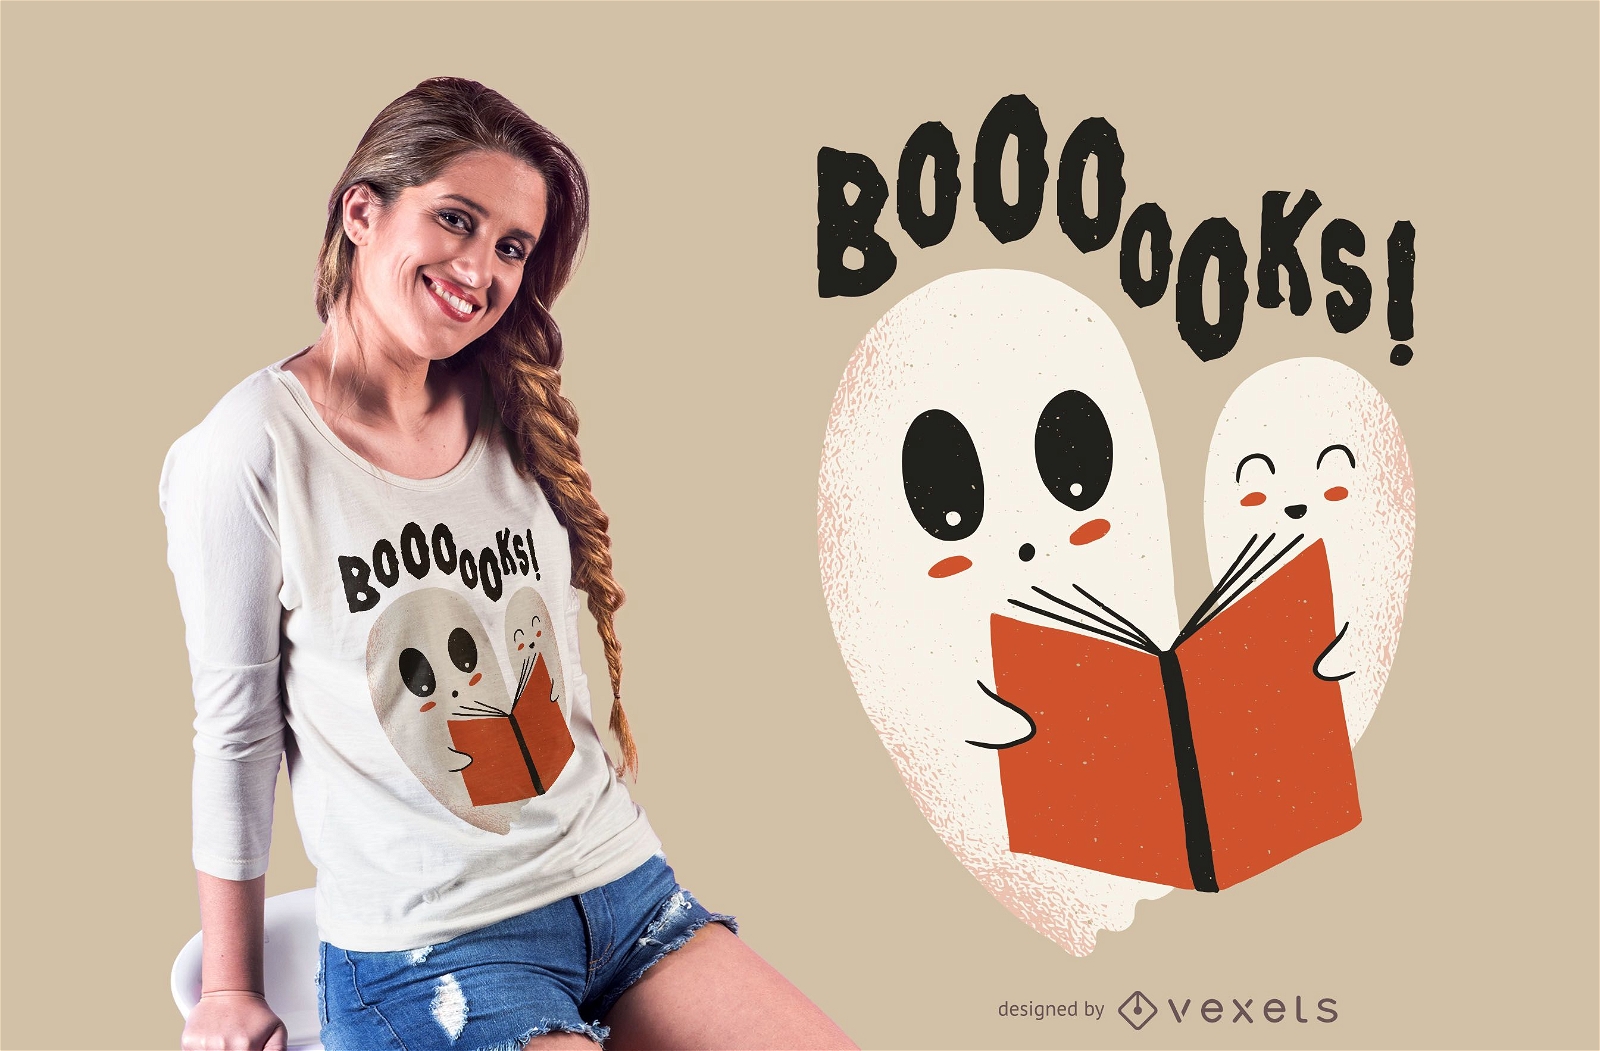 Books ghosts t-shirt design